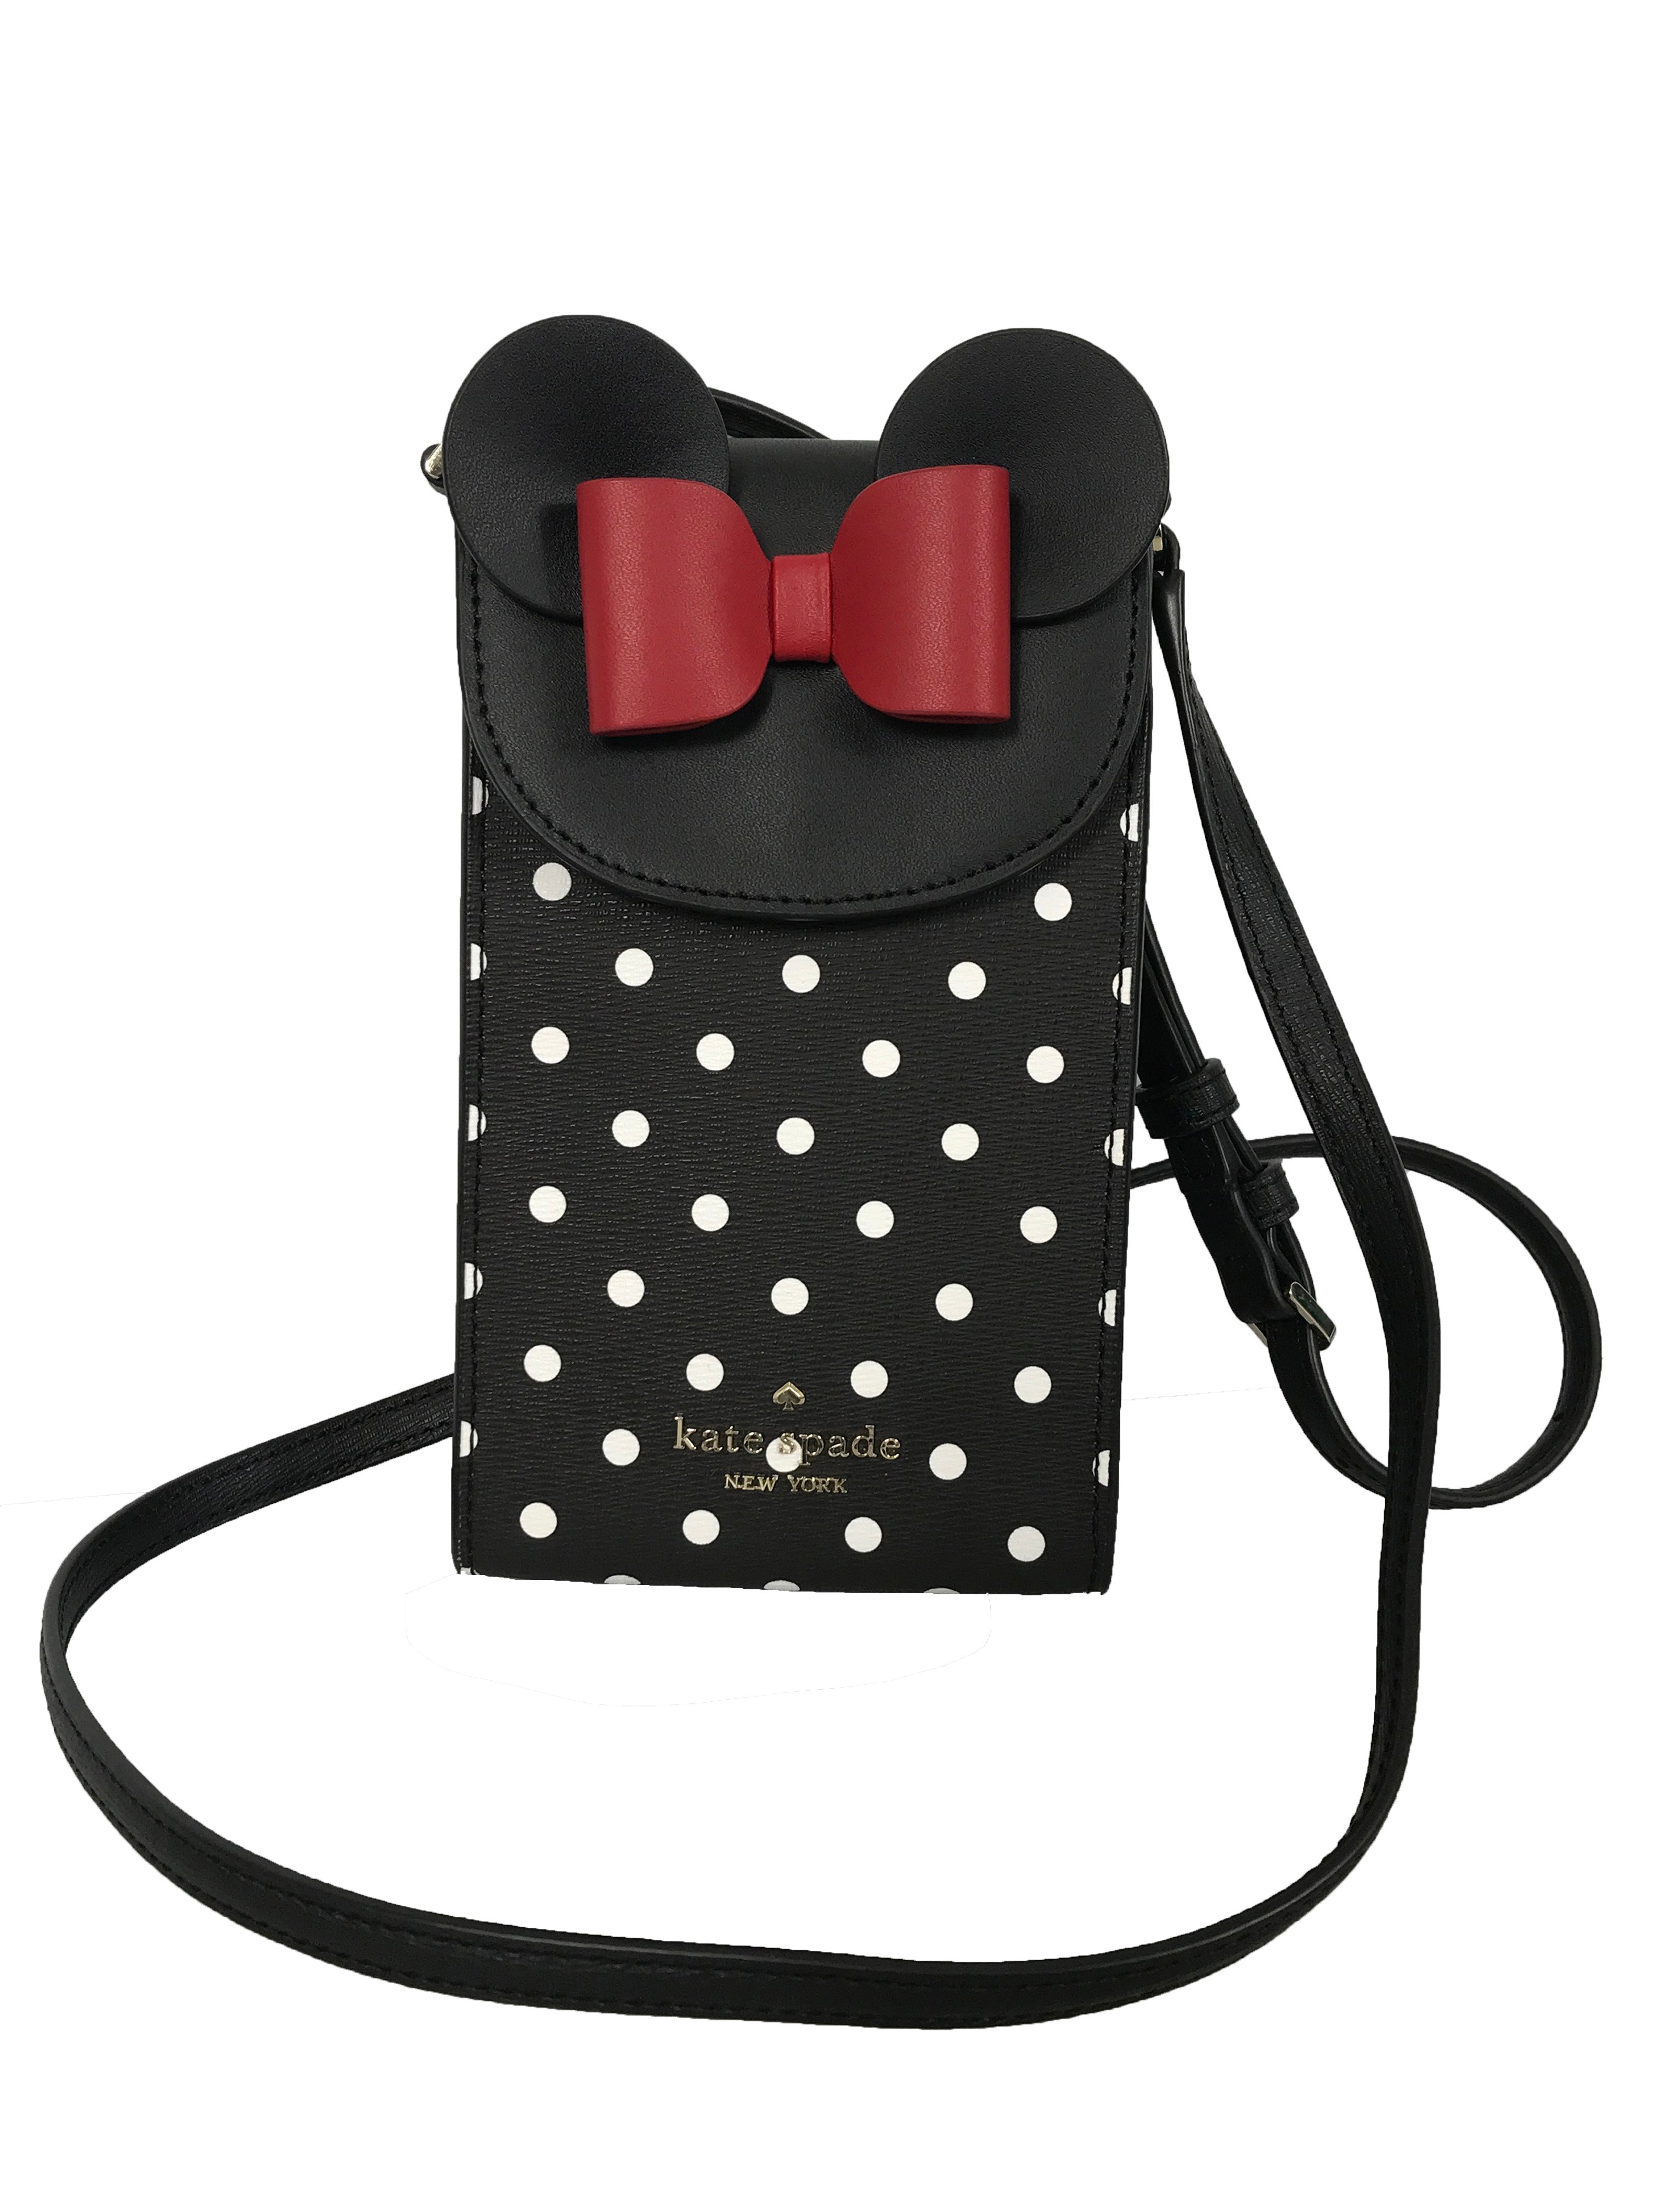 Kate Spade New York Disney X Minnie Mouse Zip Around Wallet, Black